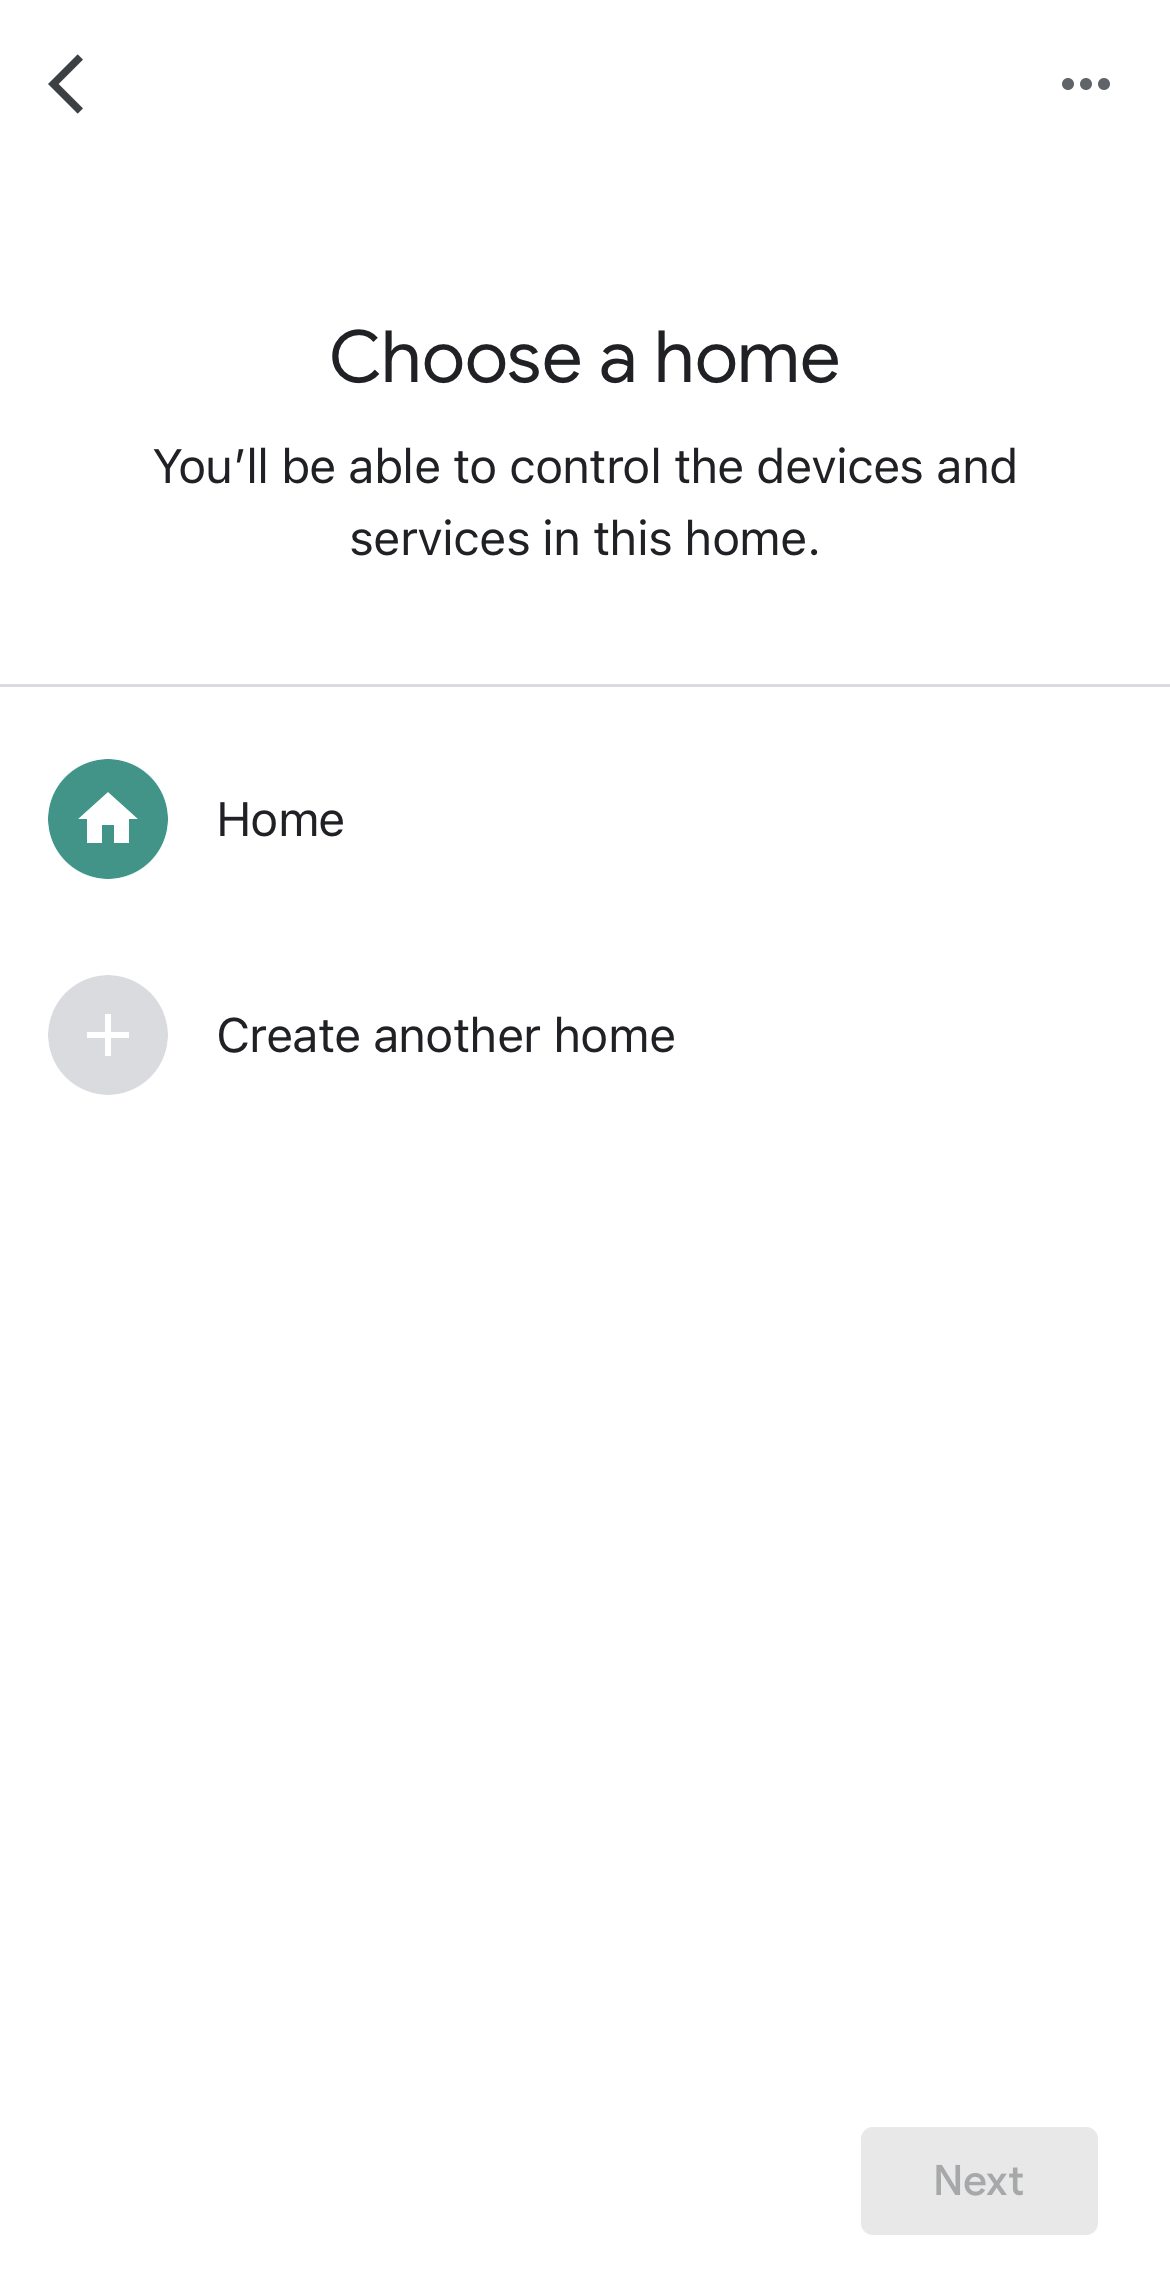 Choosing a Home in Google Home